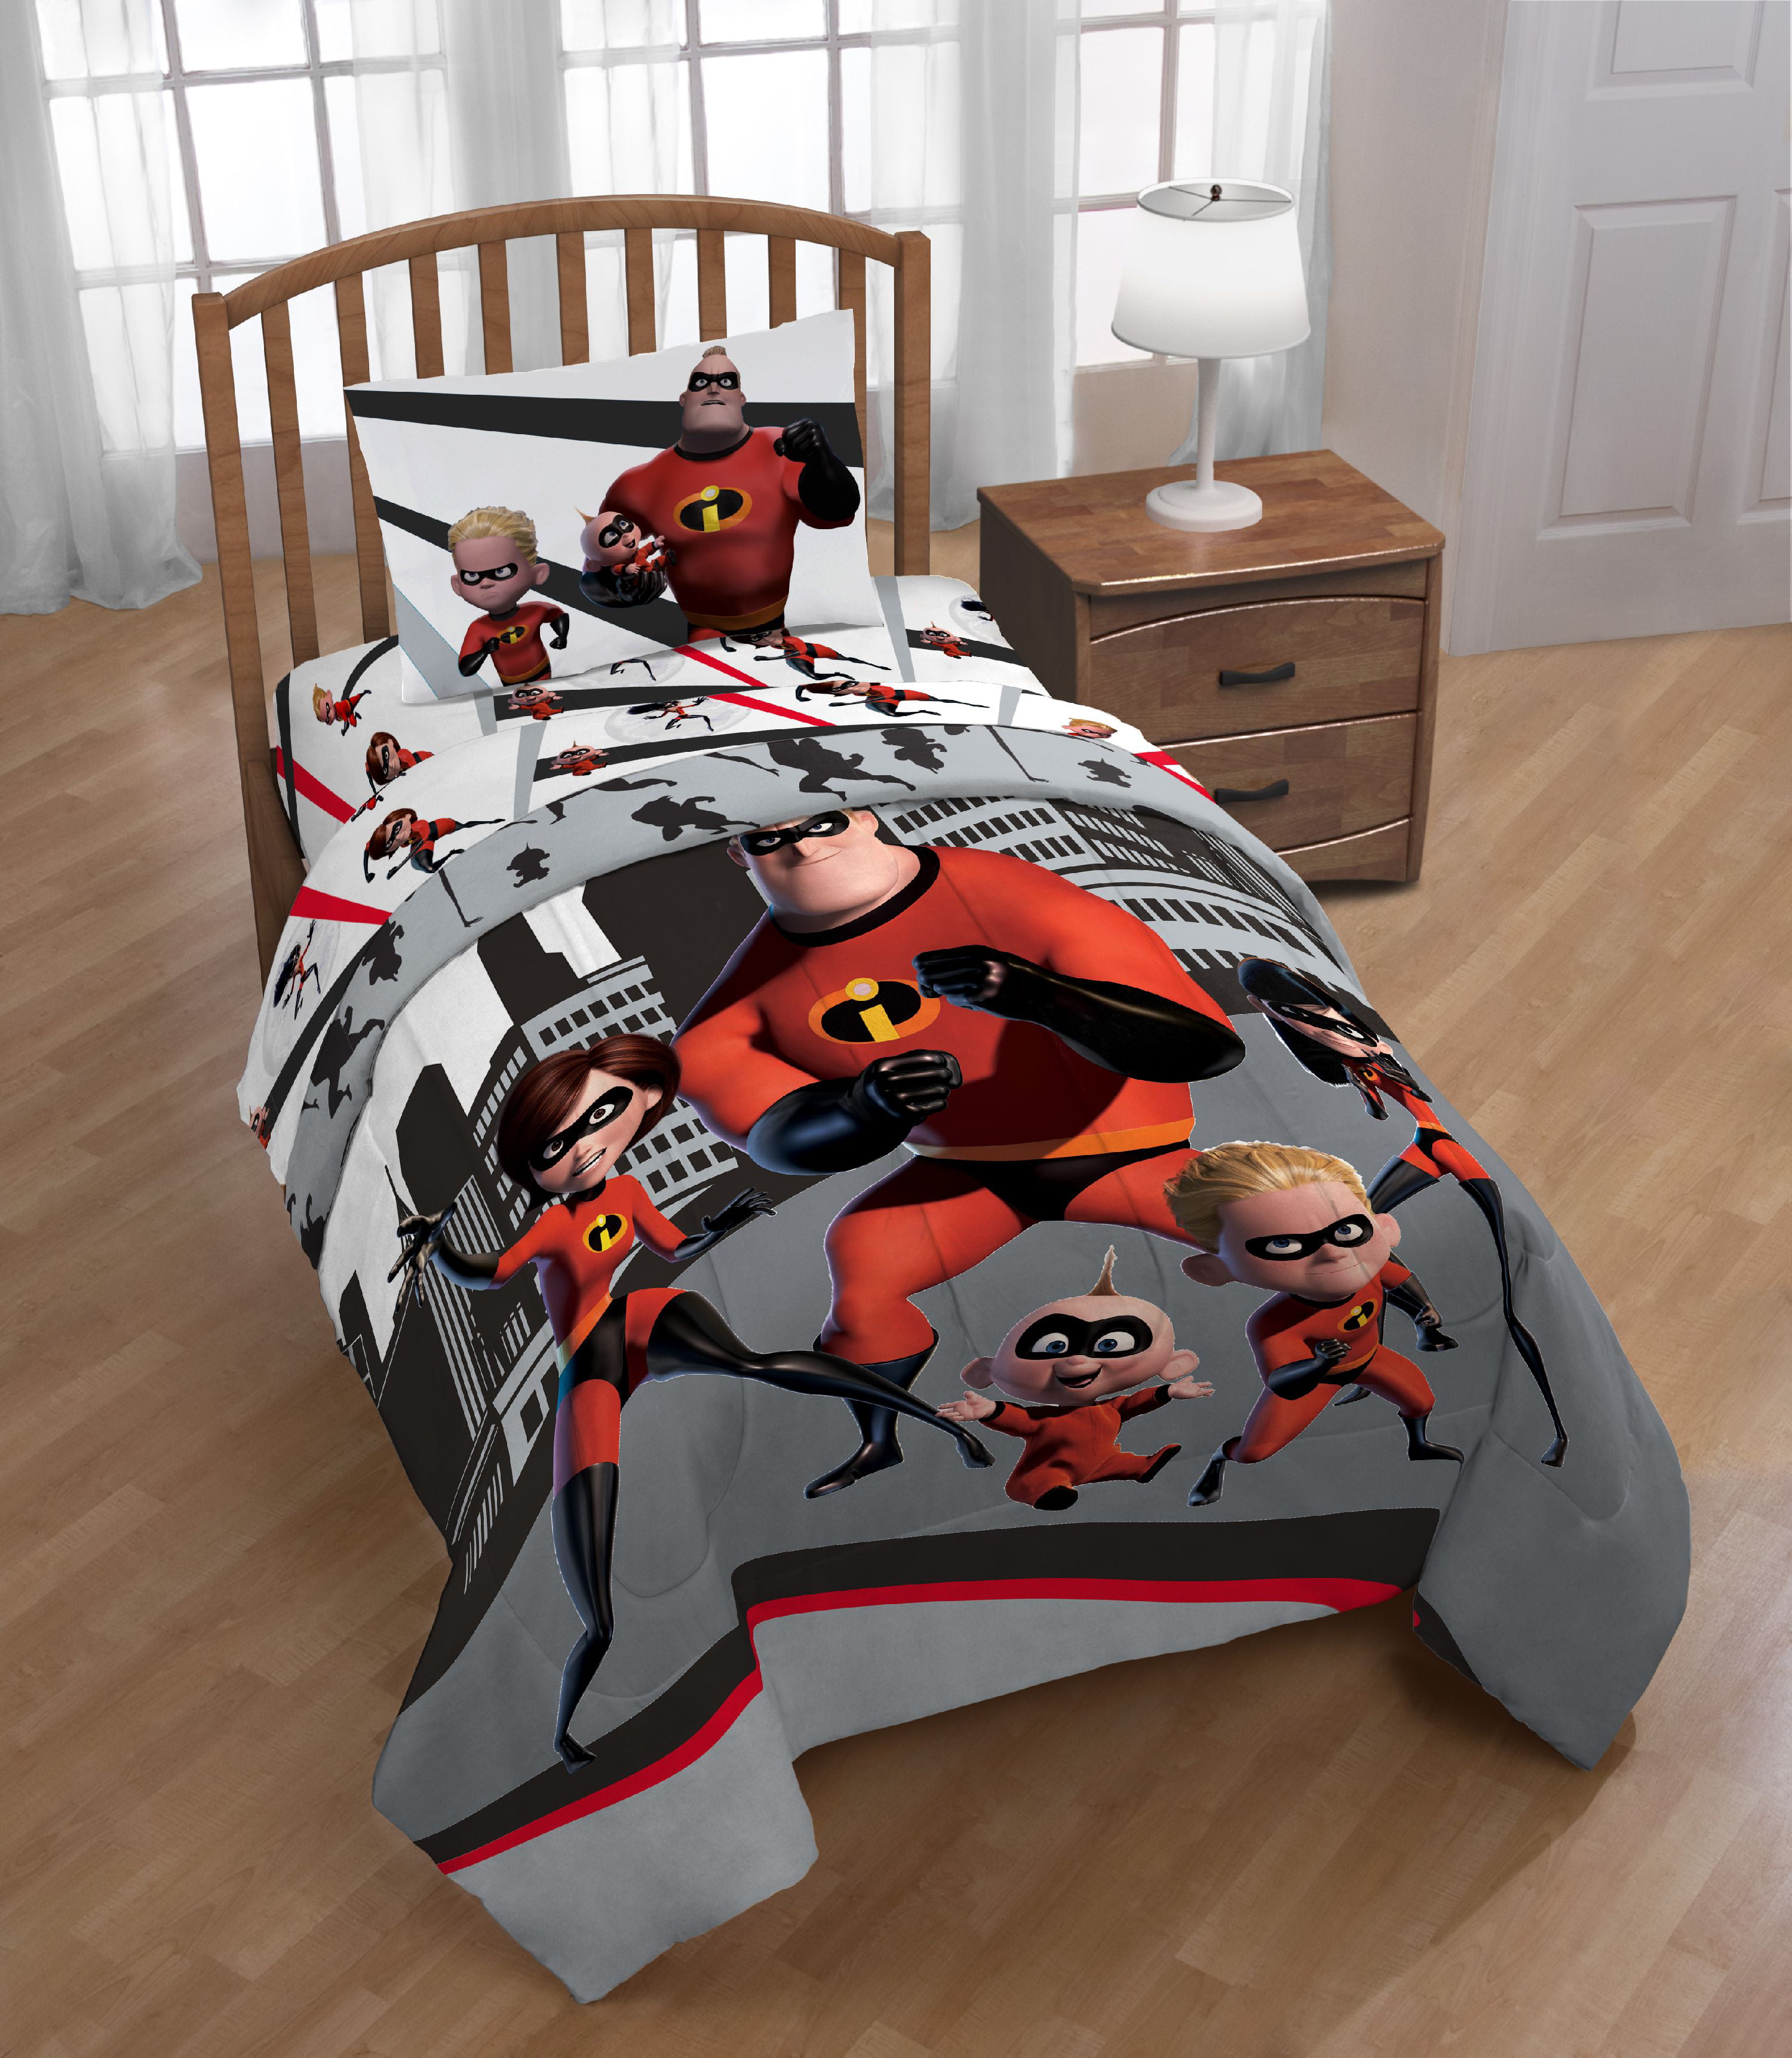 Disney Incredibles 2 Kids Twin Size Comforter Blanket Reversible Design Bedding 